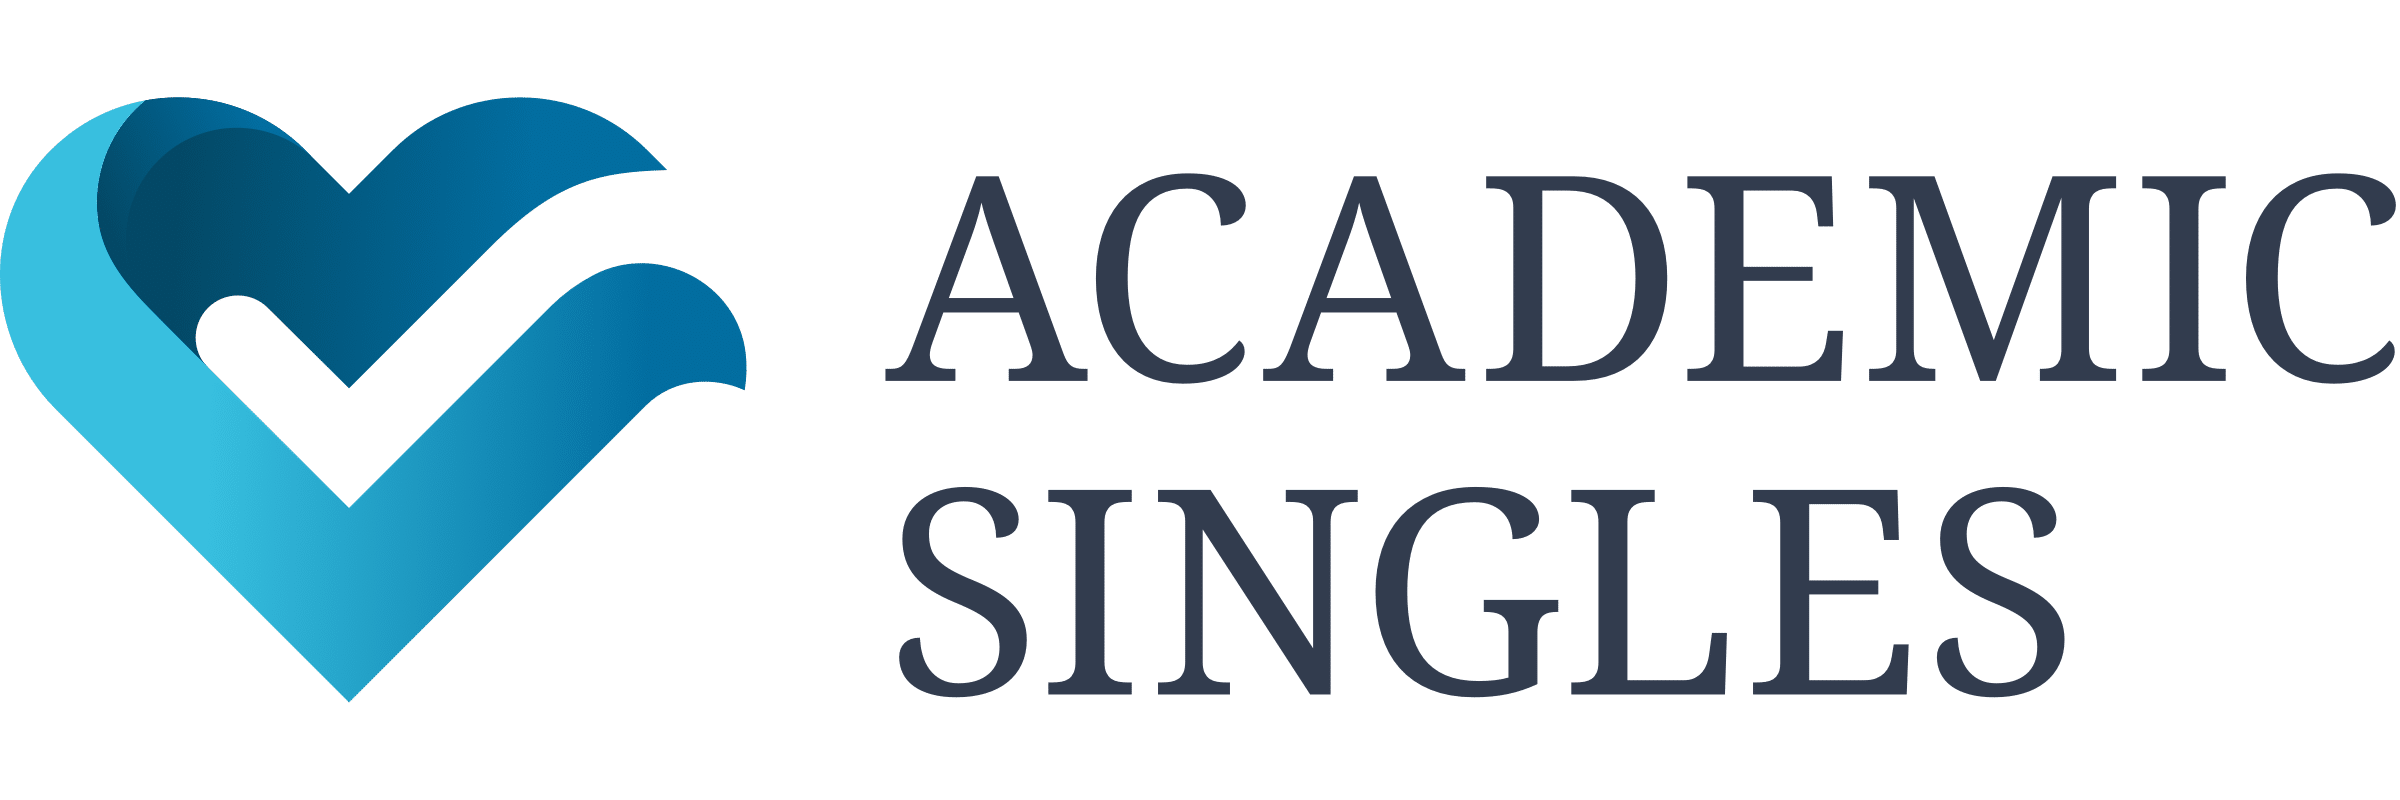 Academic Singles anmeldelse